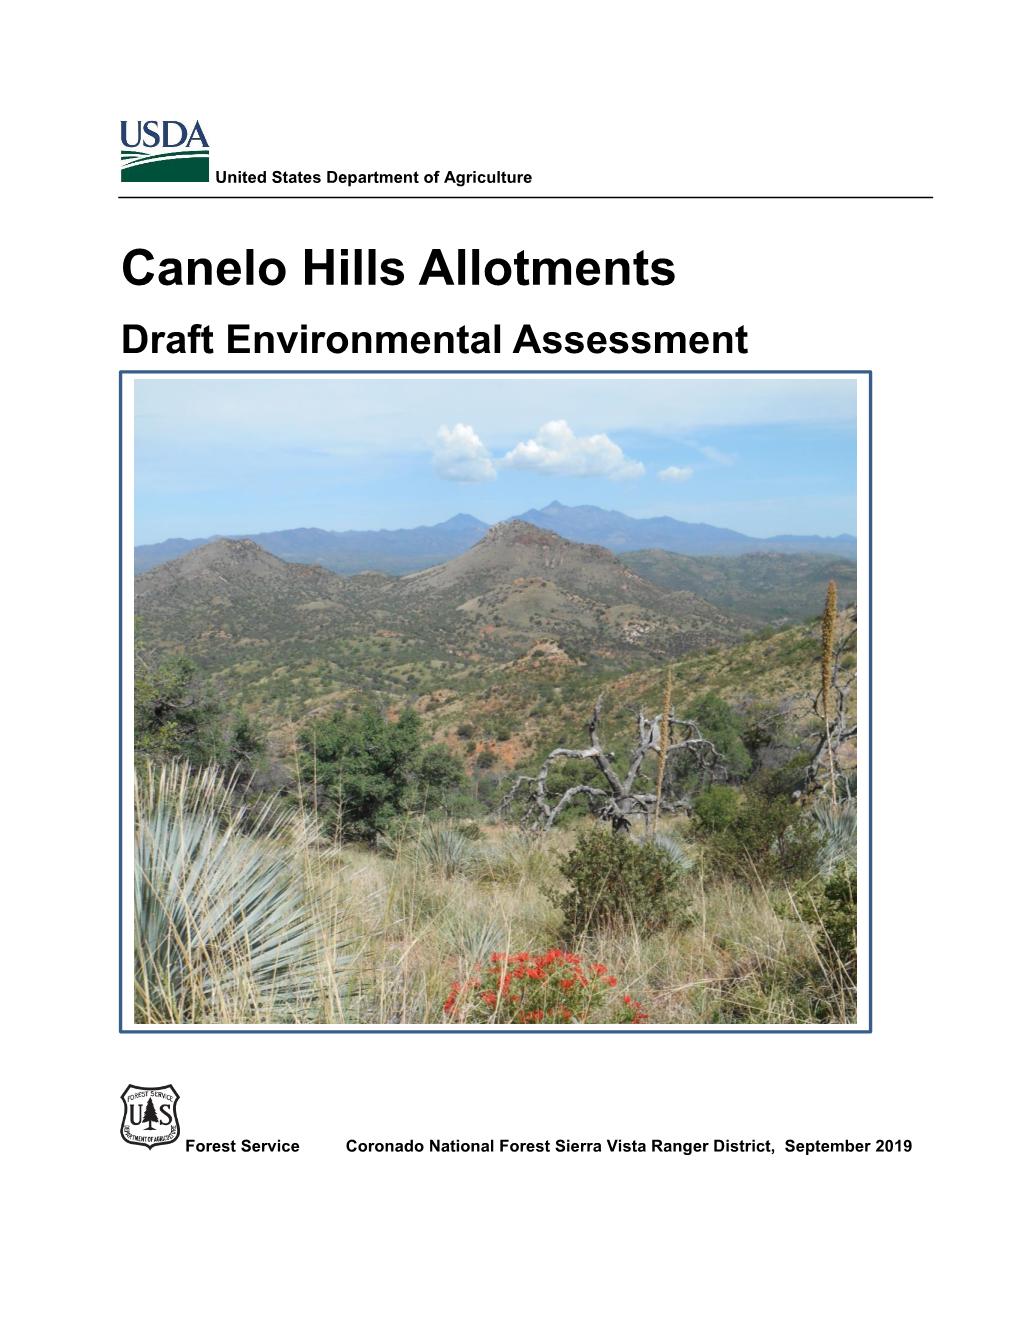 Canelo Hills Allotments Draft Environmental Assessment